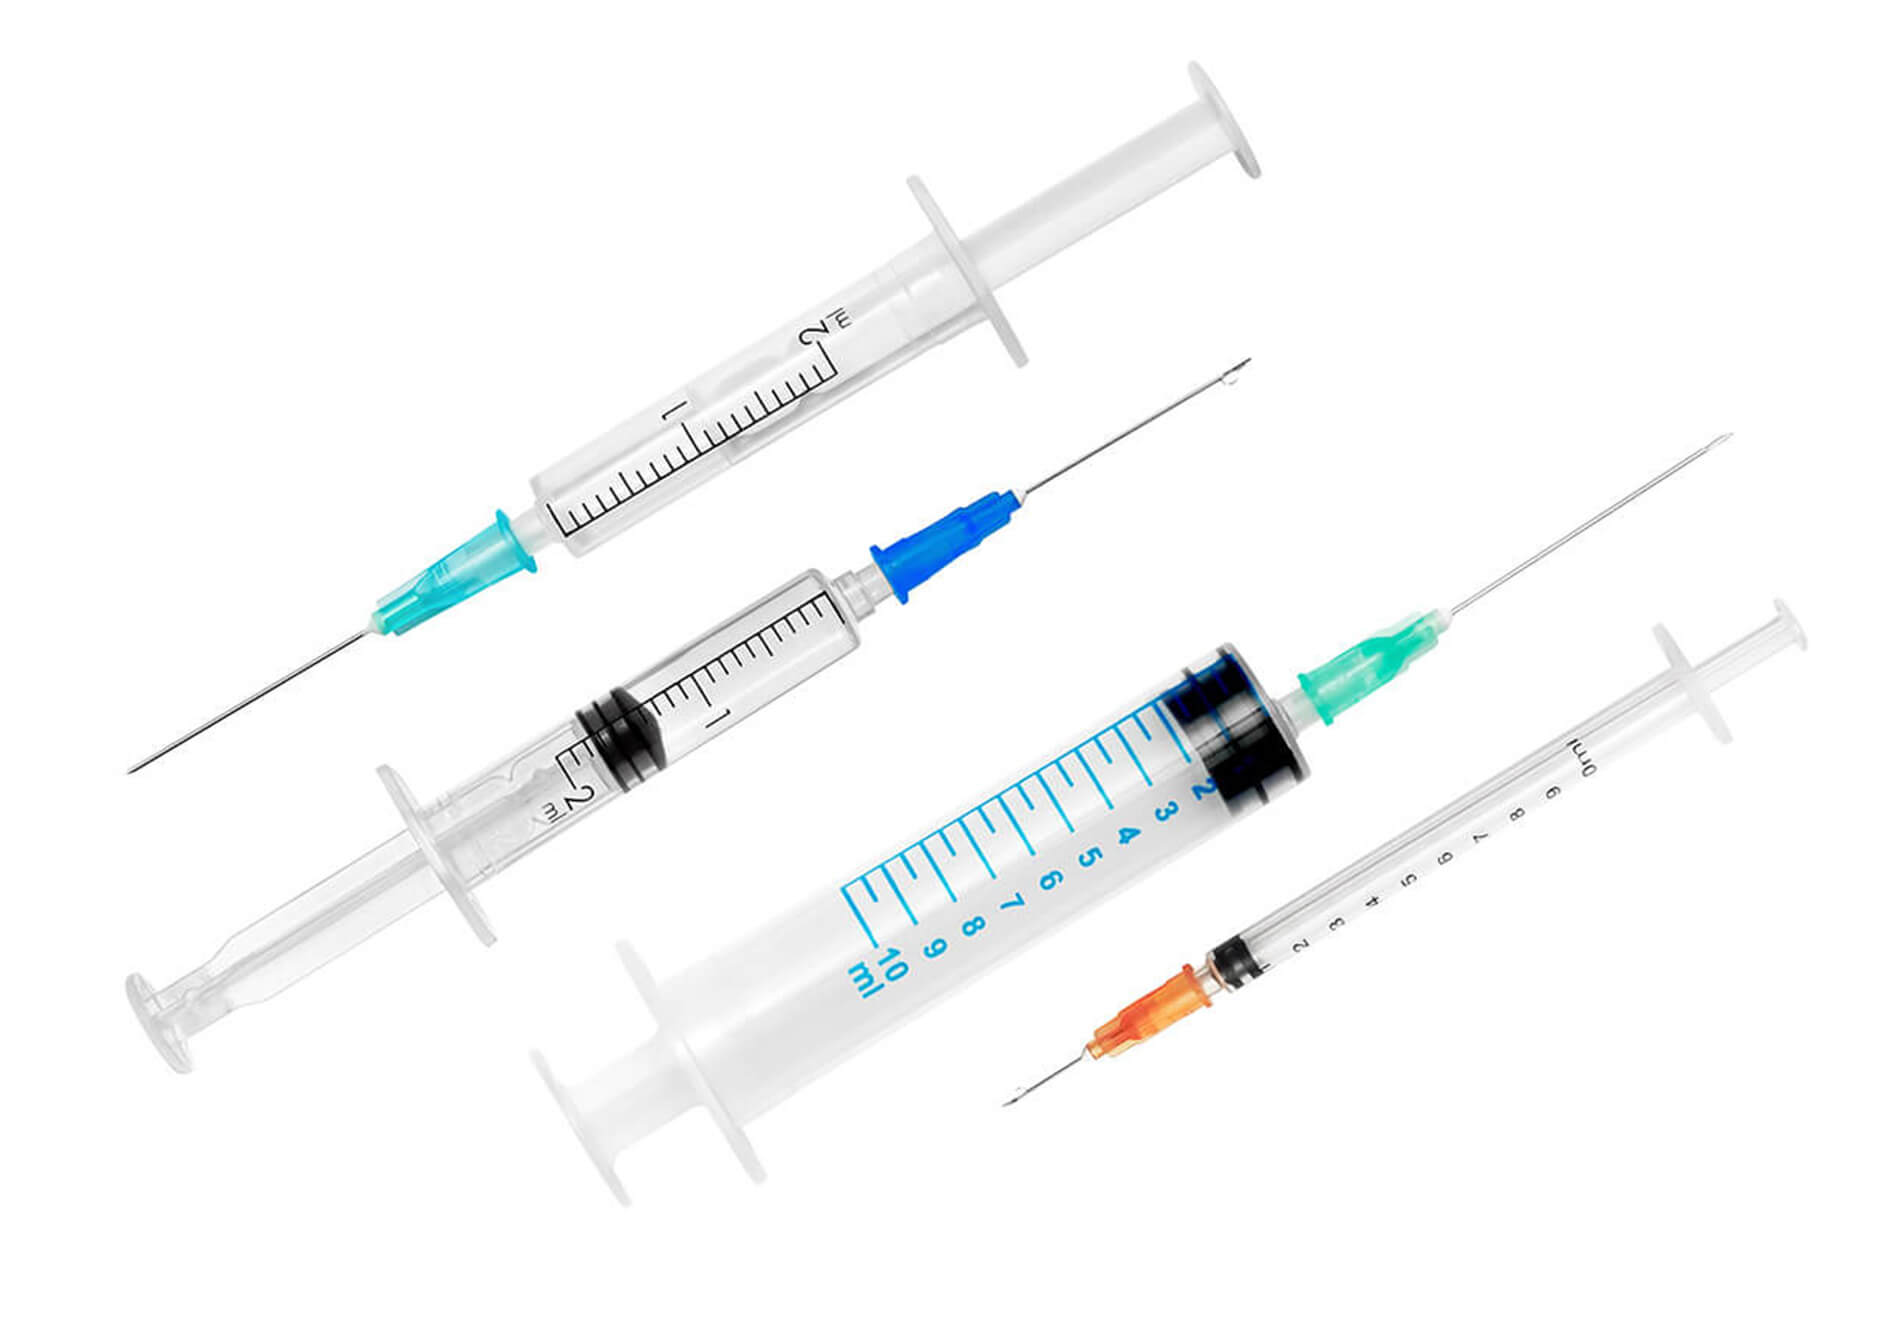 Syringes manufactured using medical plastic molding